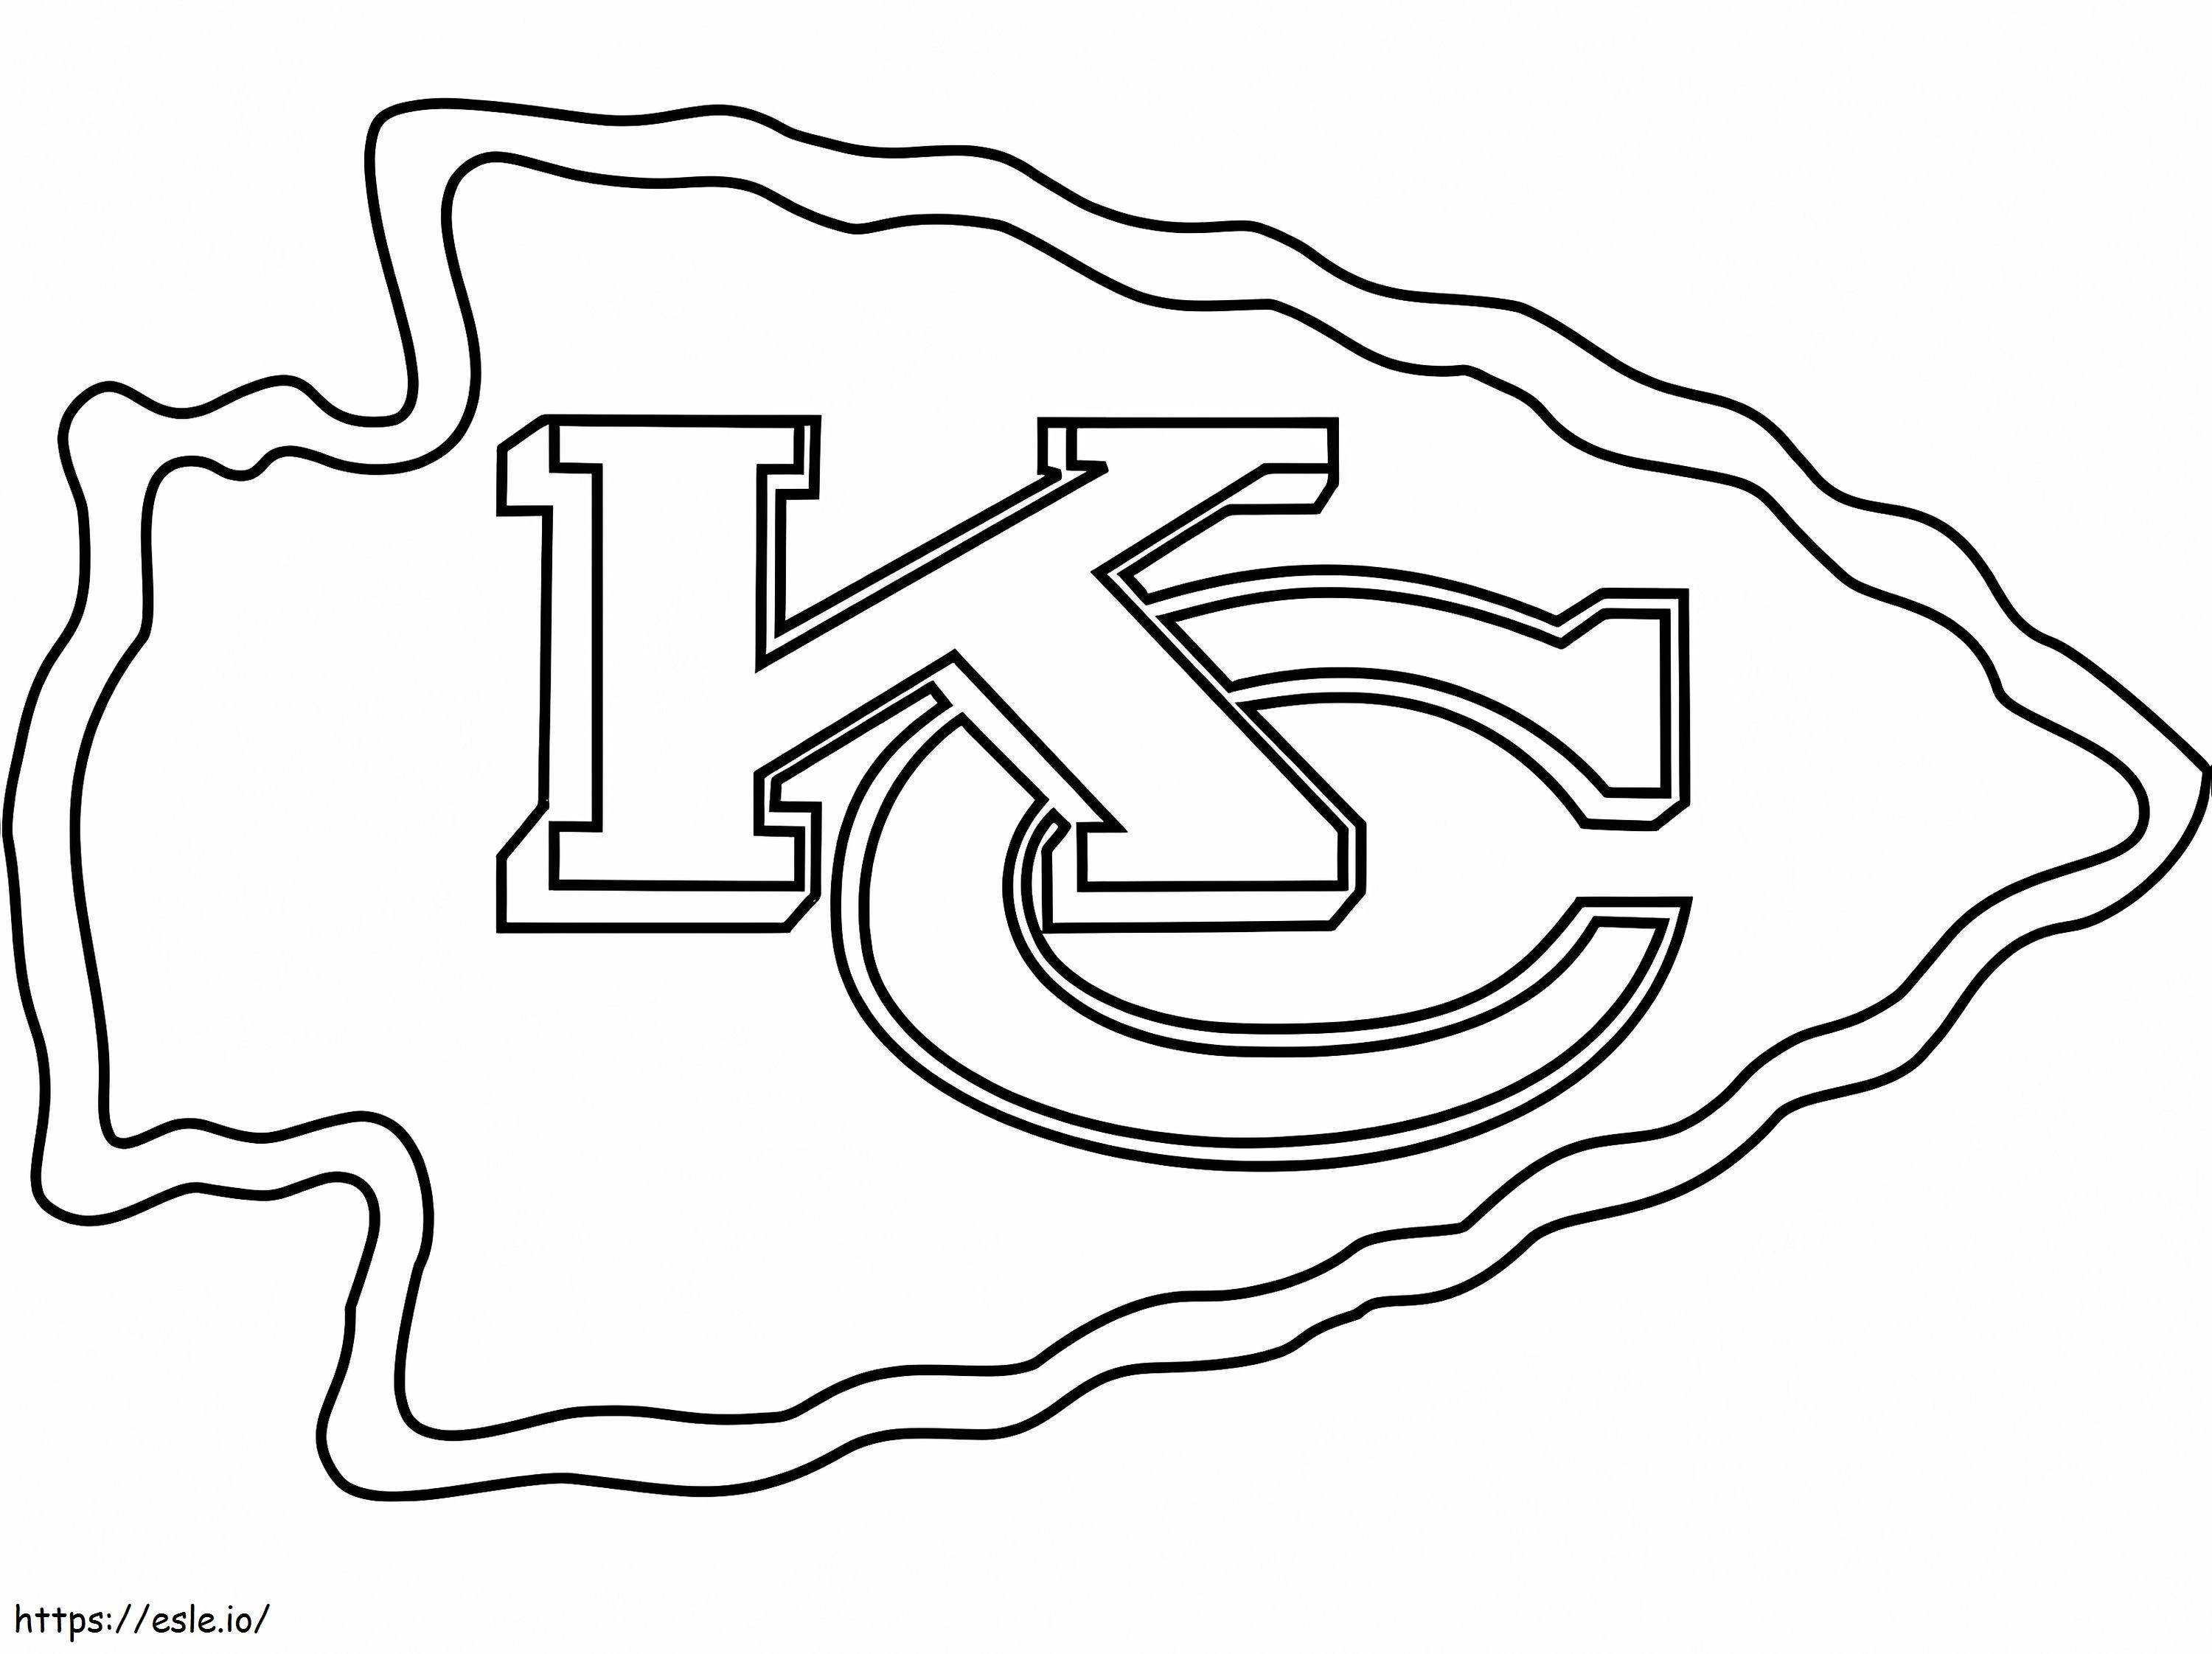 Logo gratuito dei Kansas City Chiefs da colorare